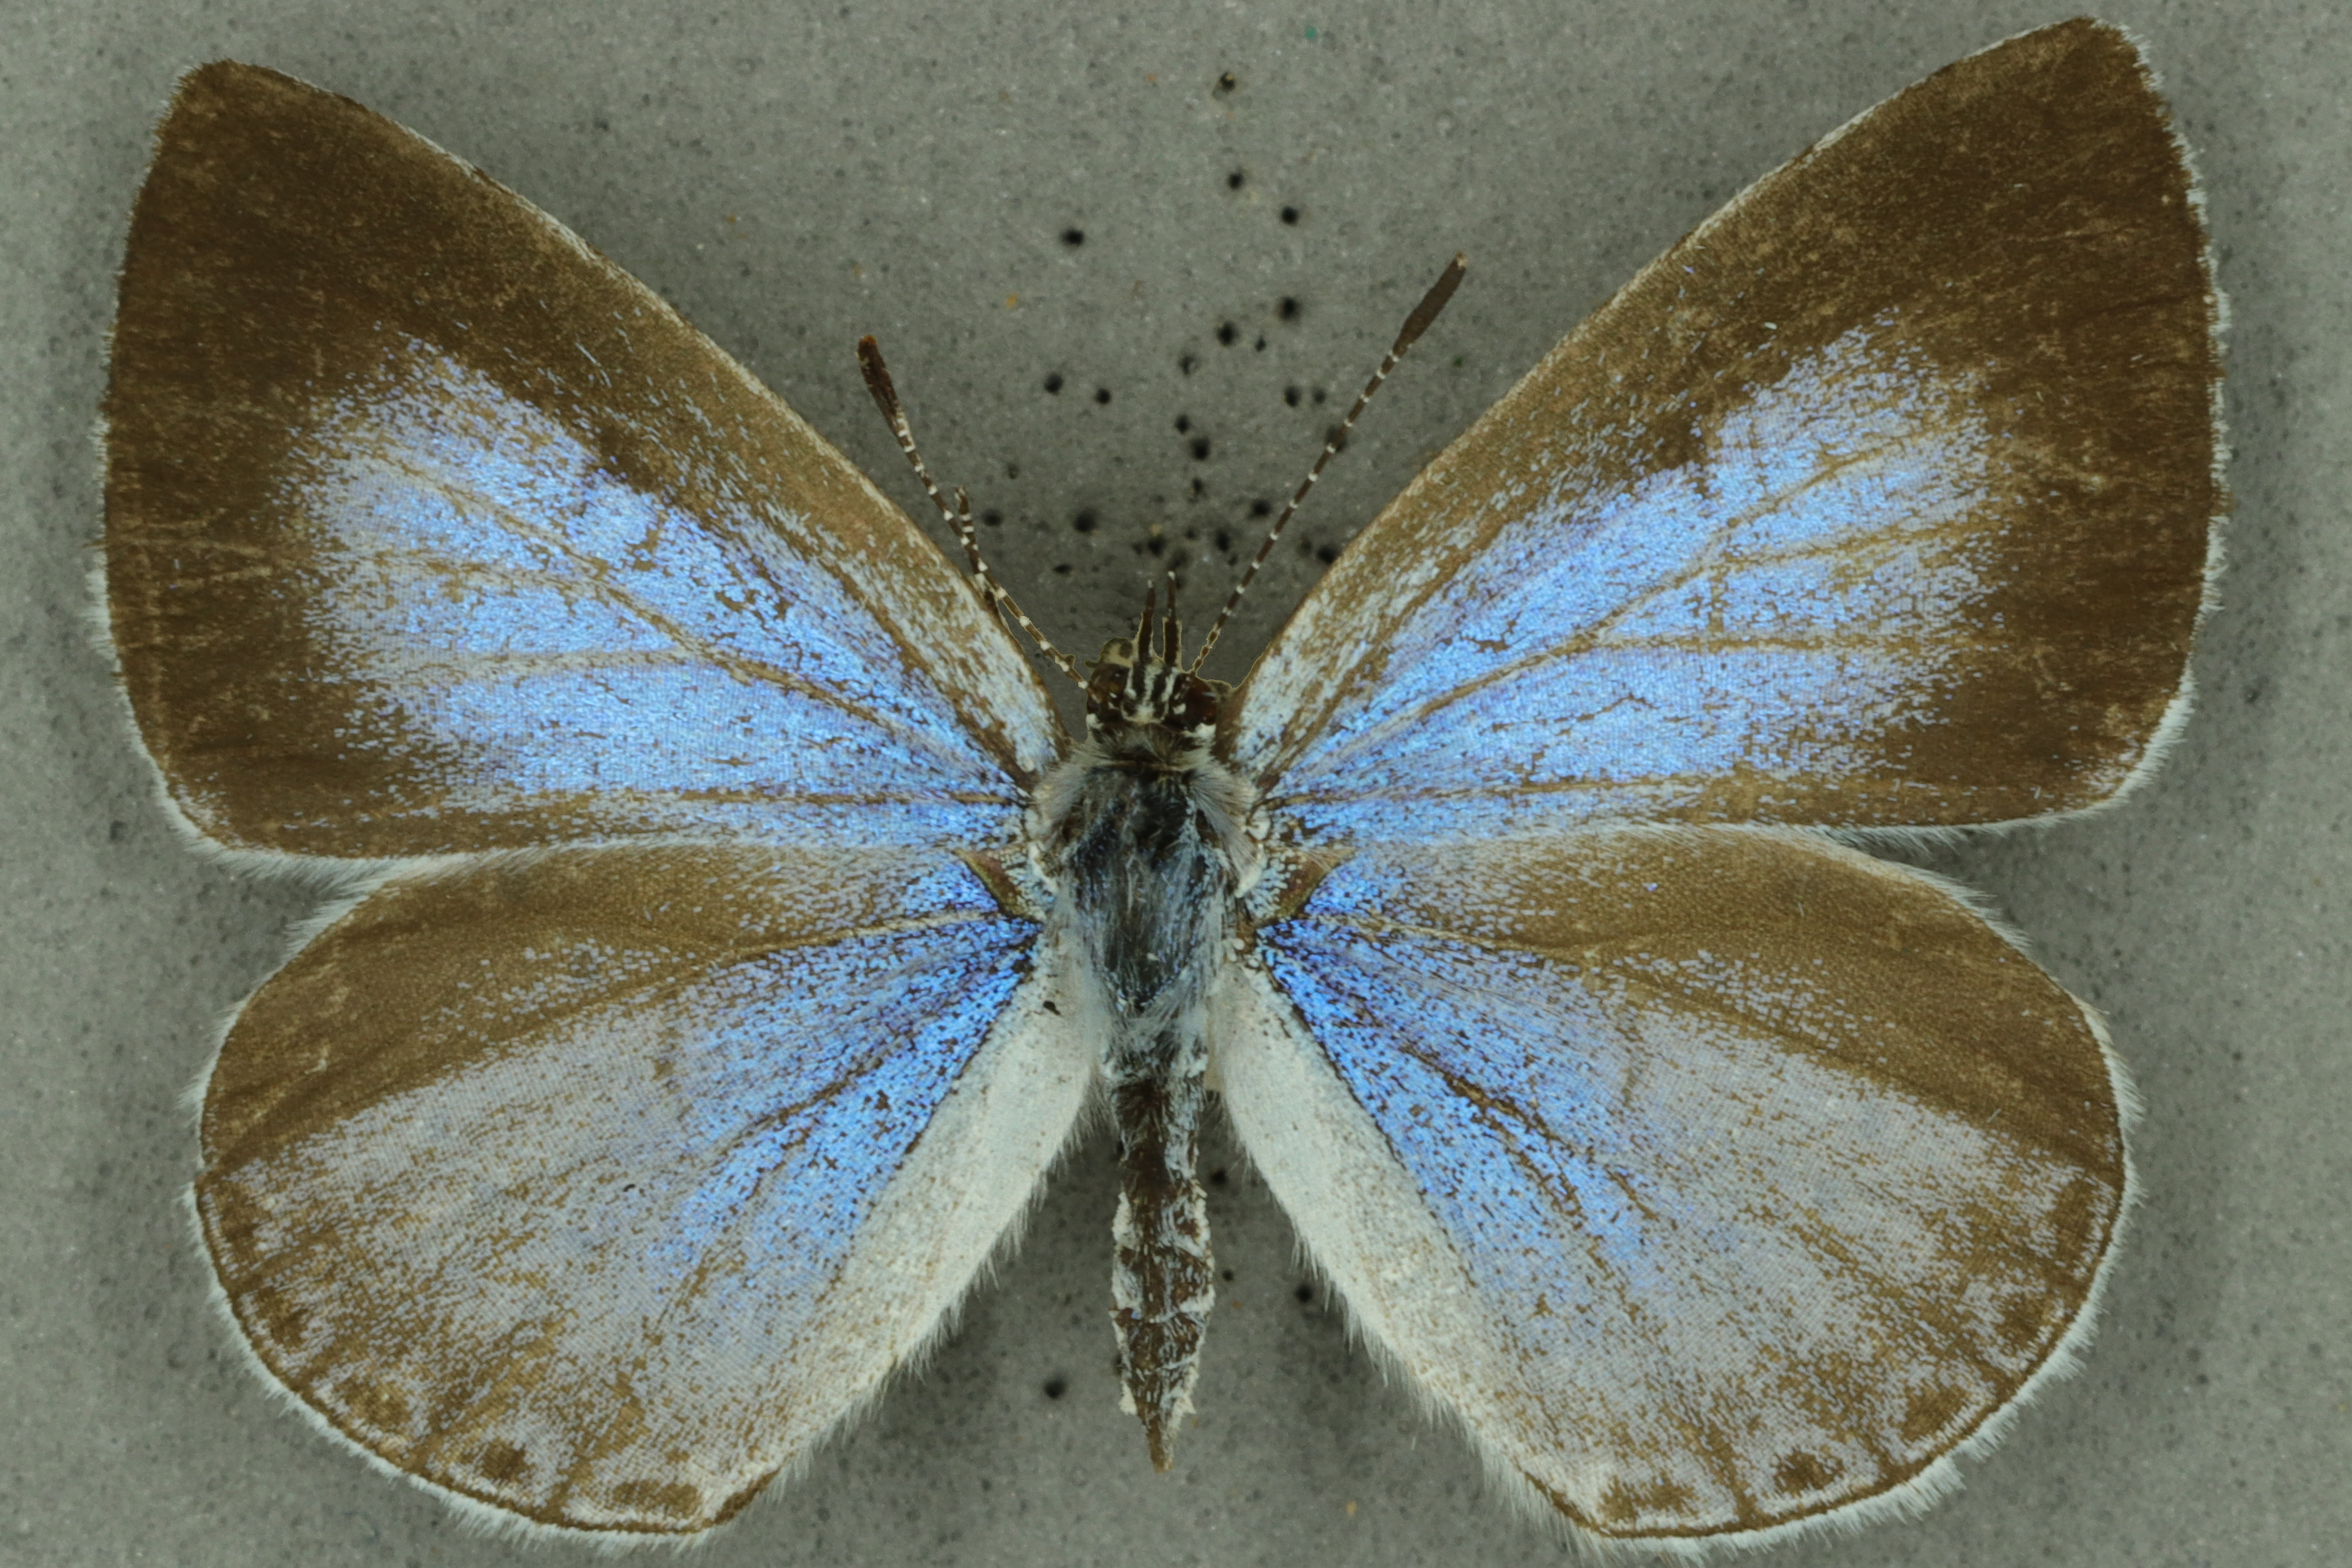 Holly blue female, University Museum of Zoology collection. Copyright University of Cambridge